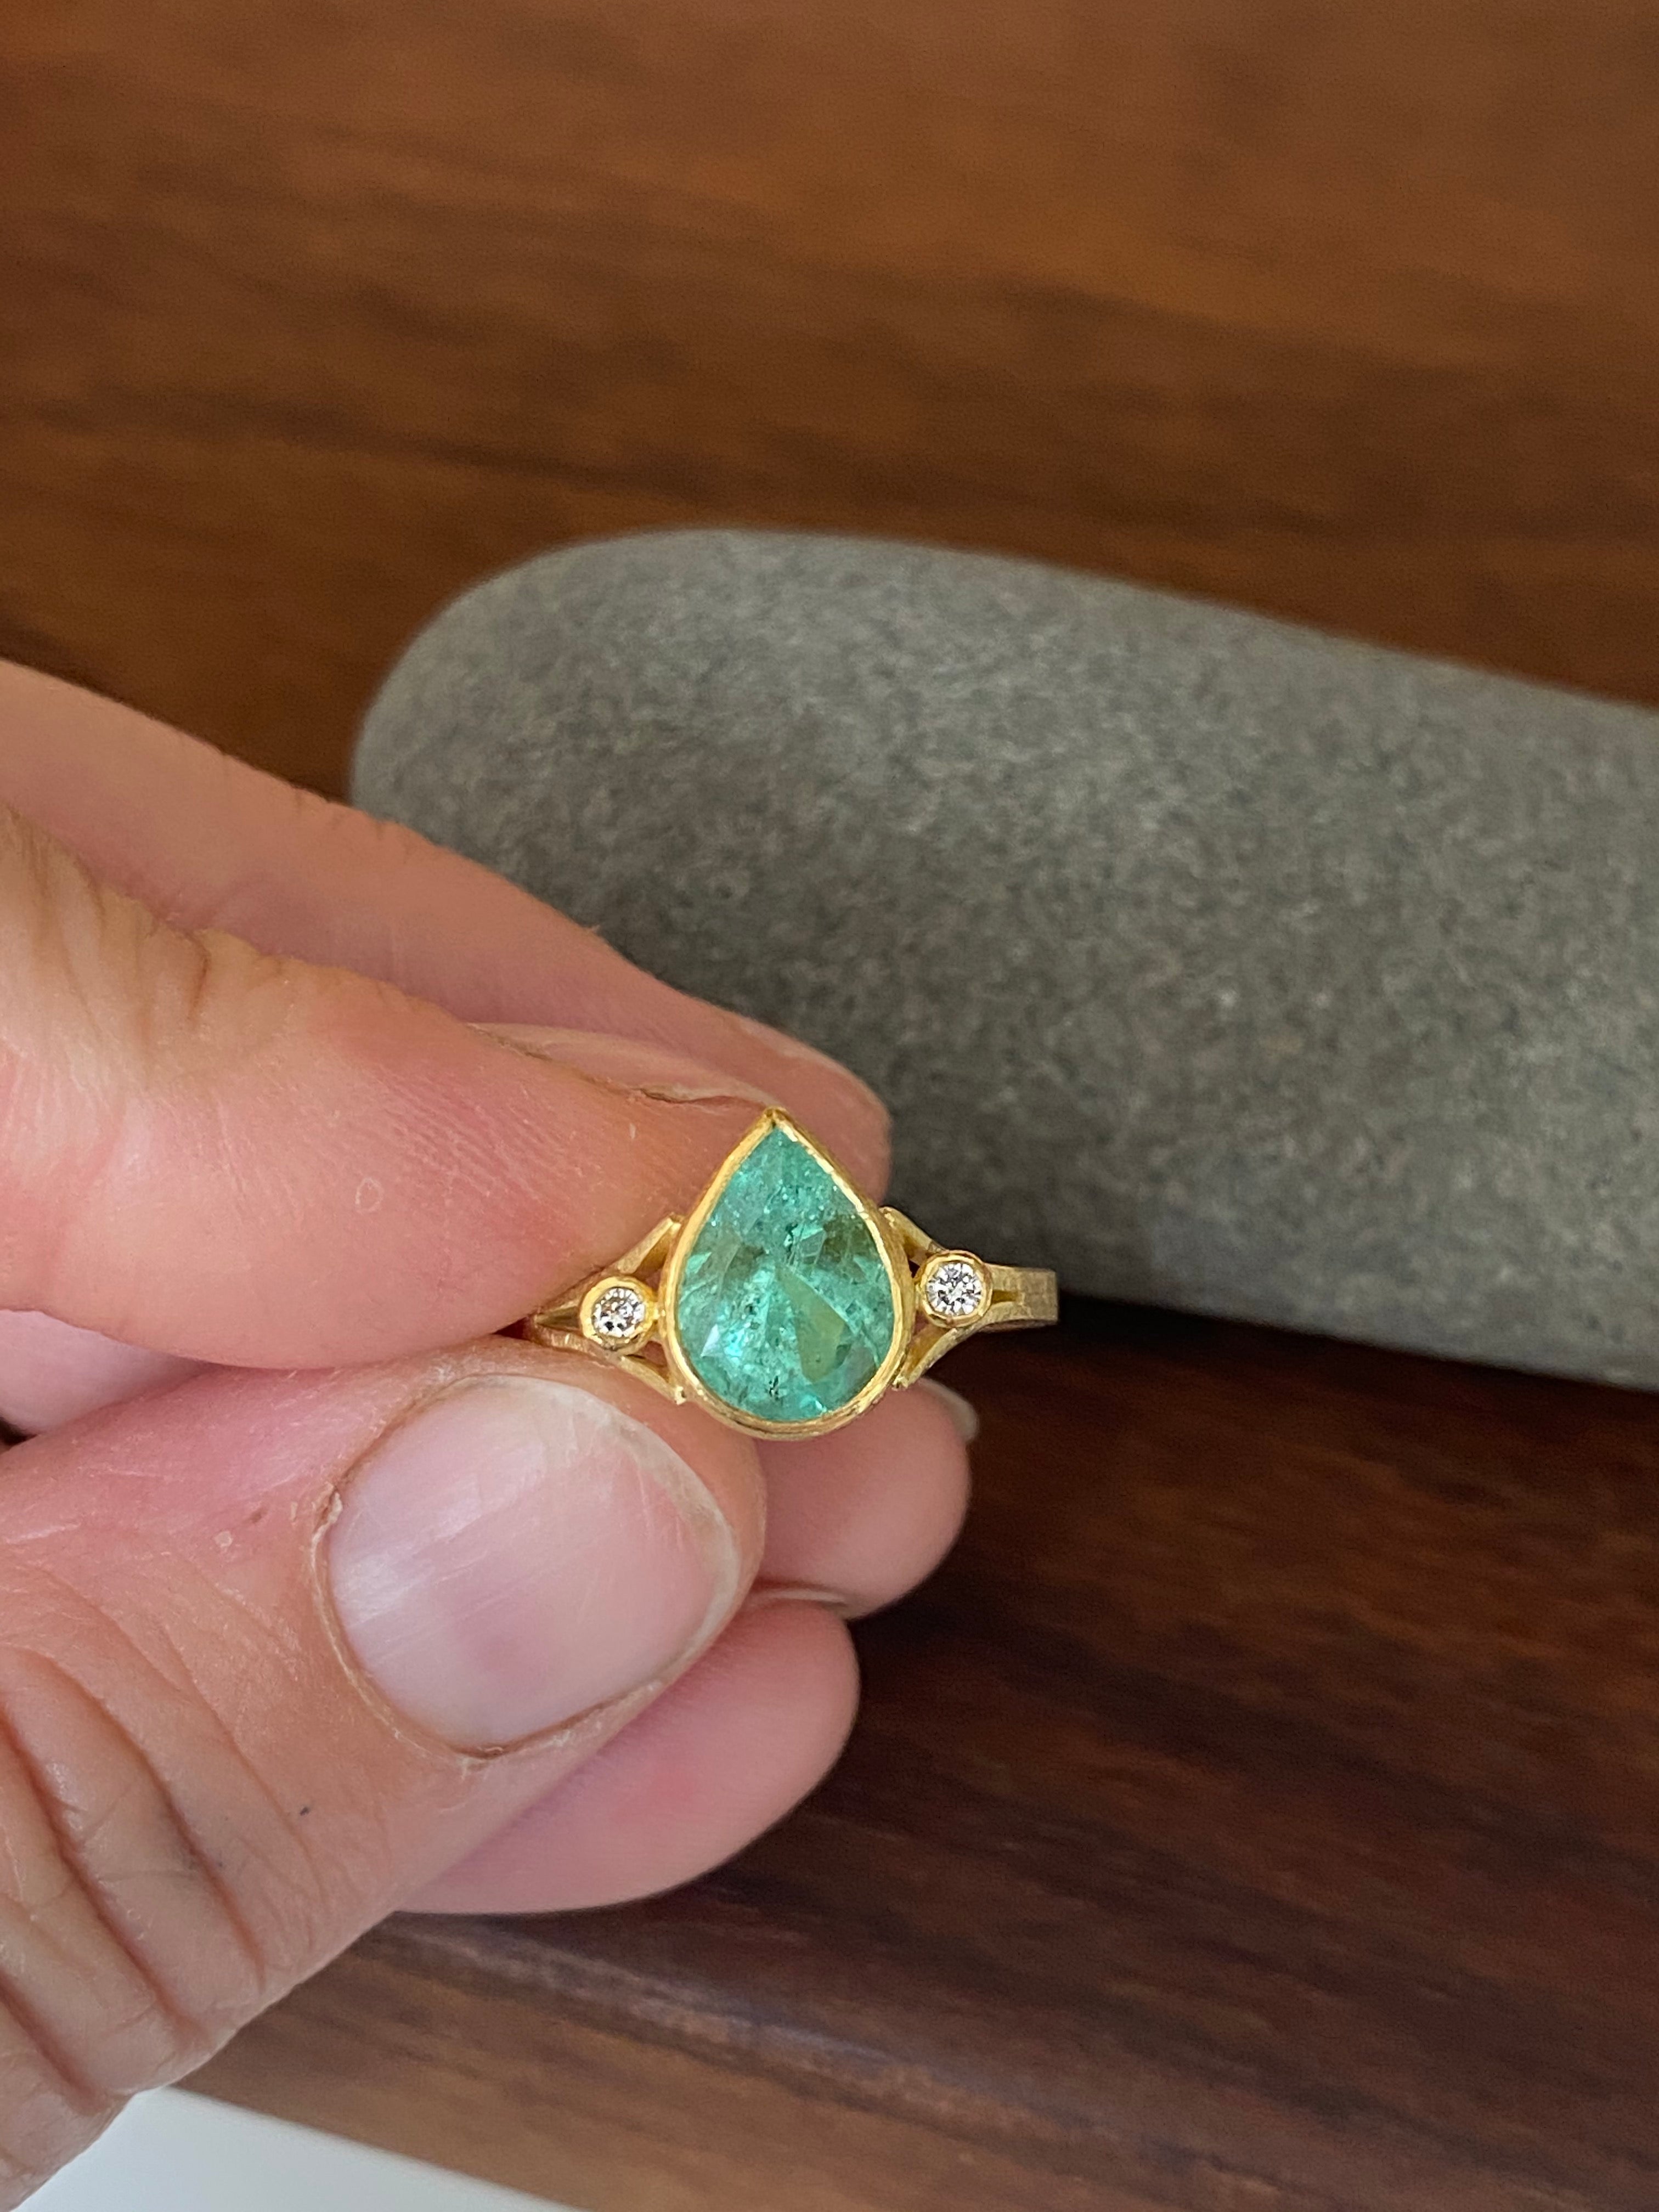 Siedra Loeffler- Emerald Seaside Ring with Diamonds